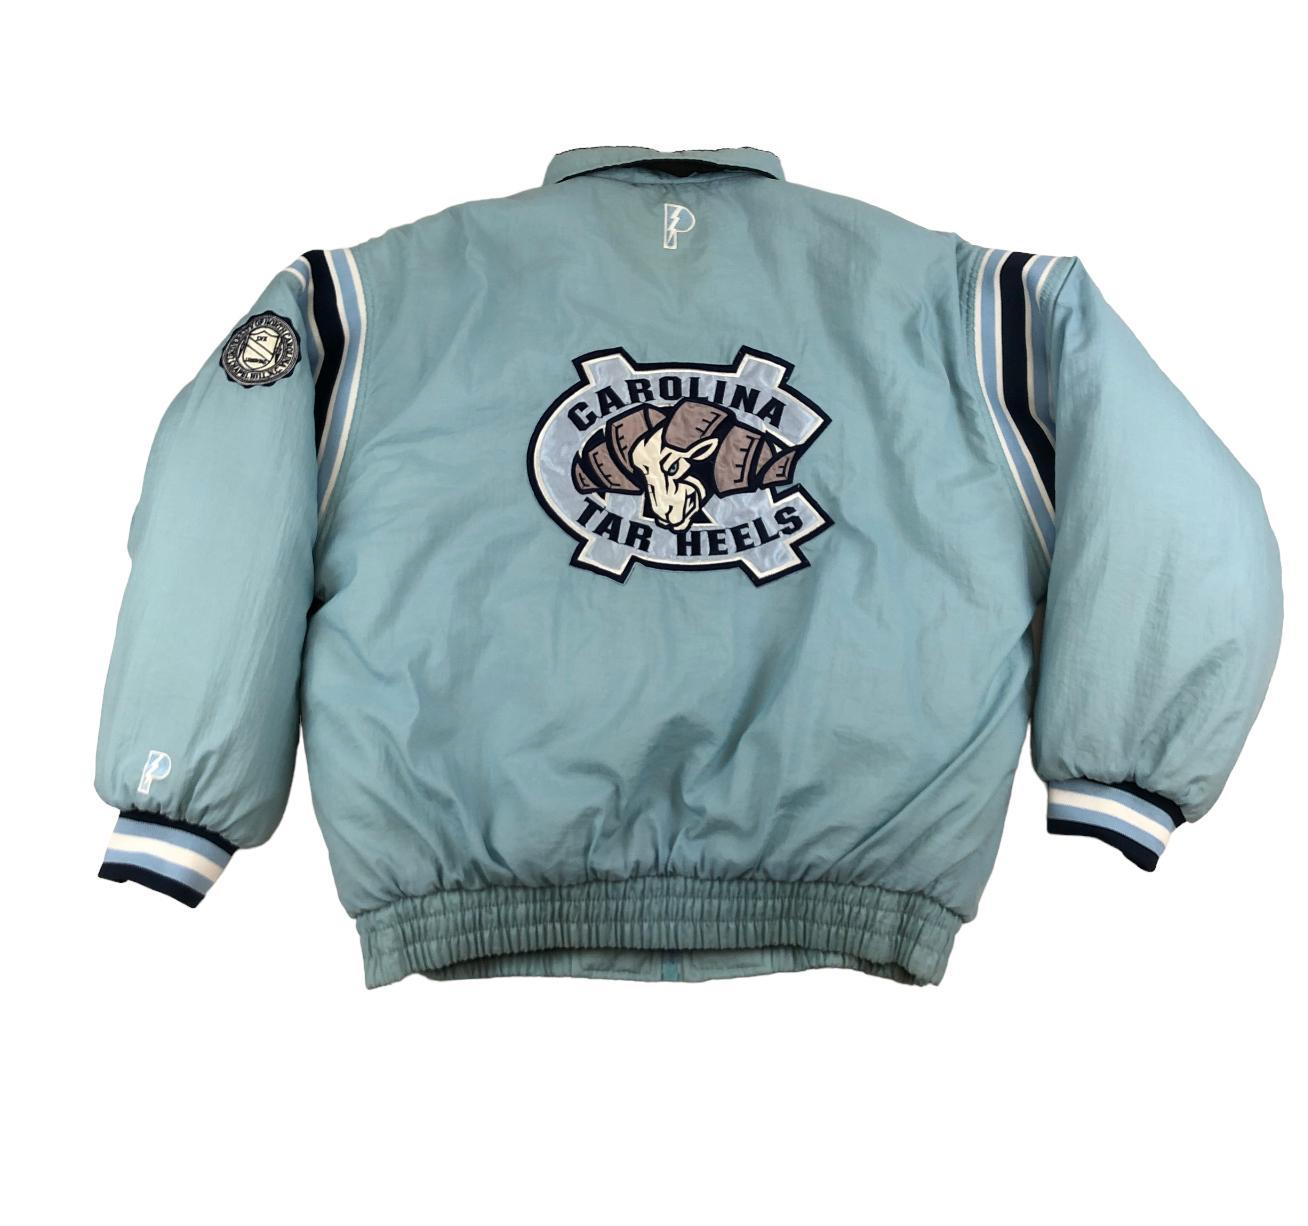 Vintage Pro Player Carolina Tar Heels Embroidered Reversible Jacket (Large)